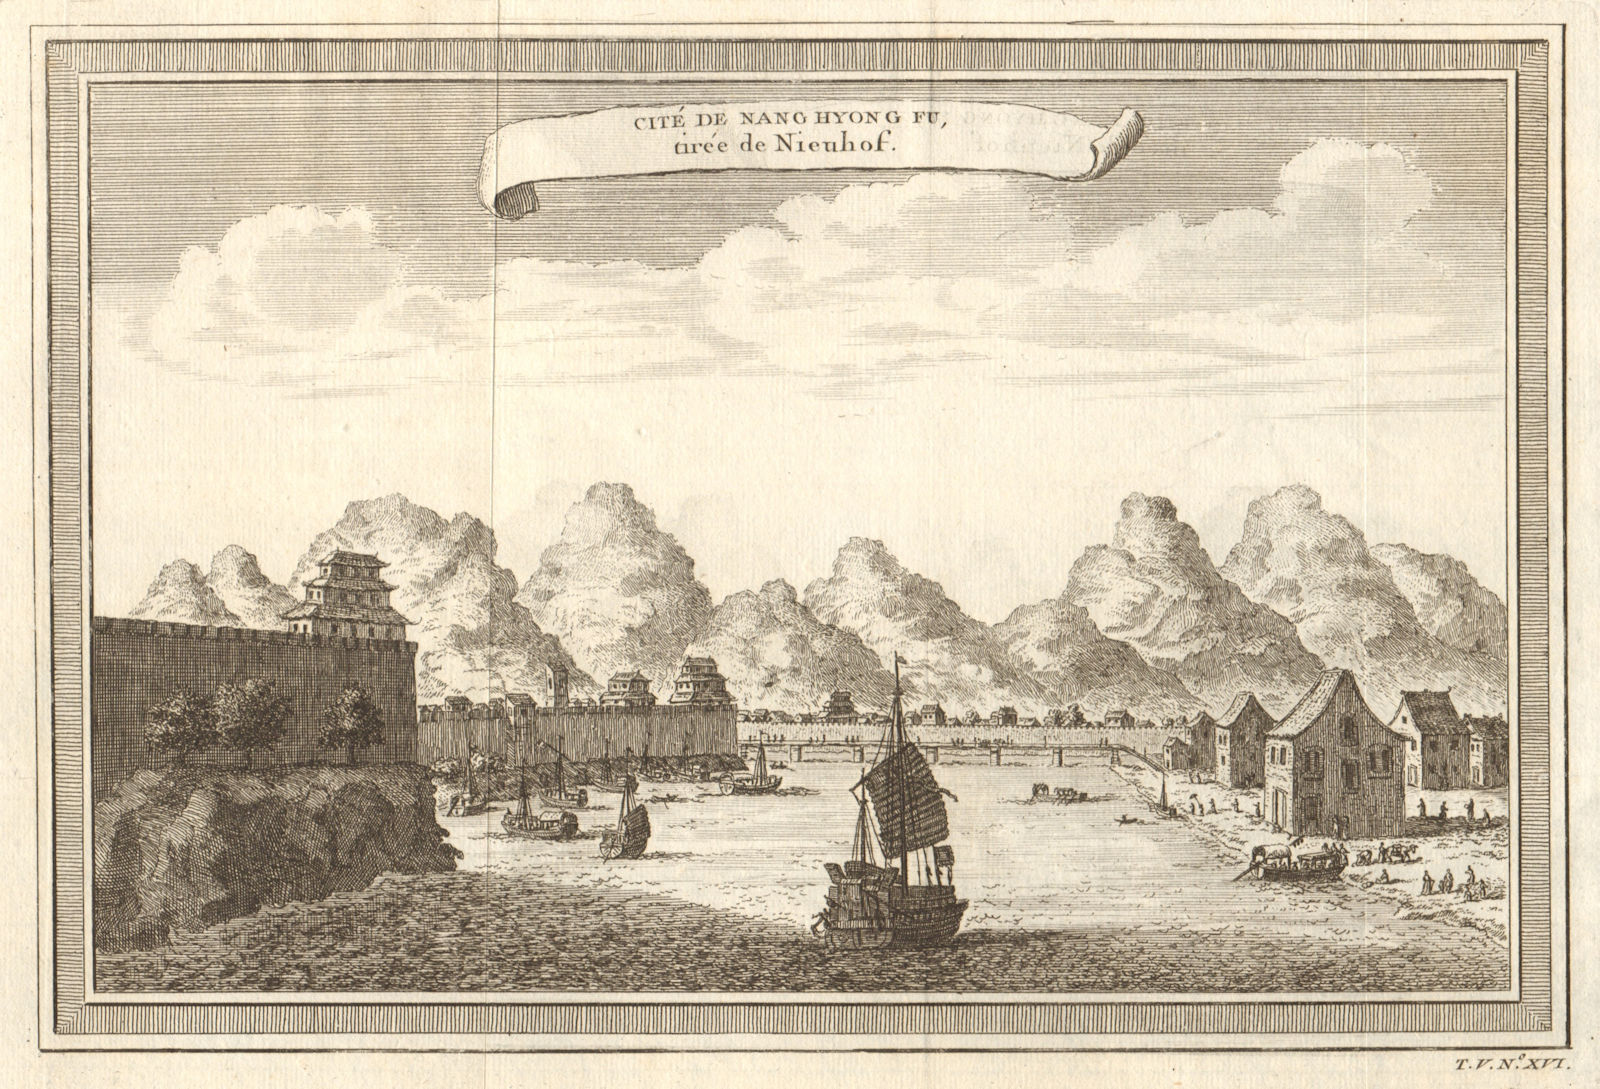 Associate Product 'Cité de Nang Hyong Fu'. View of the city of Nanxiong, China, from Nieuhof 1748